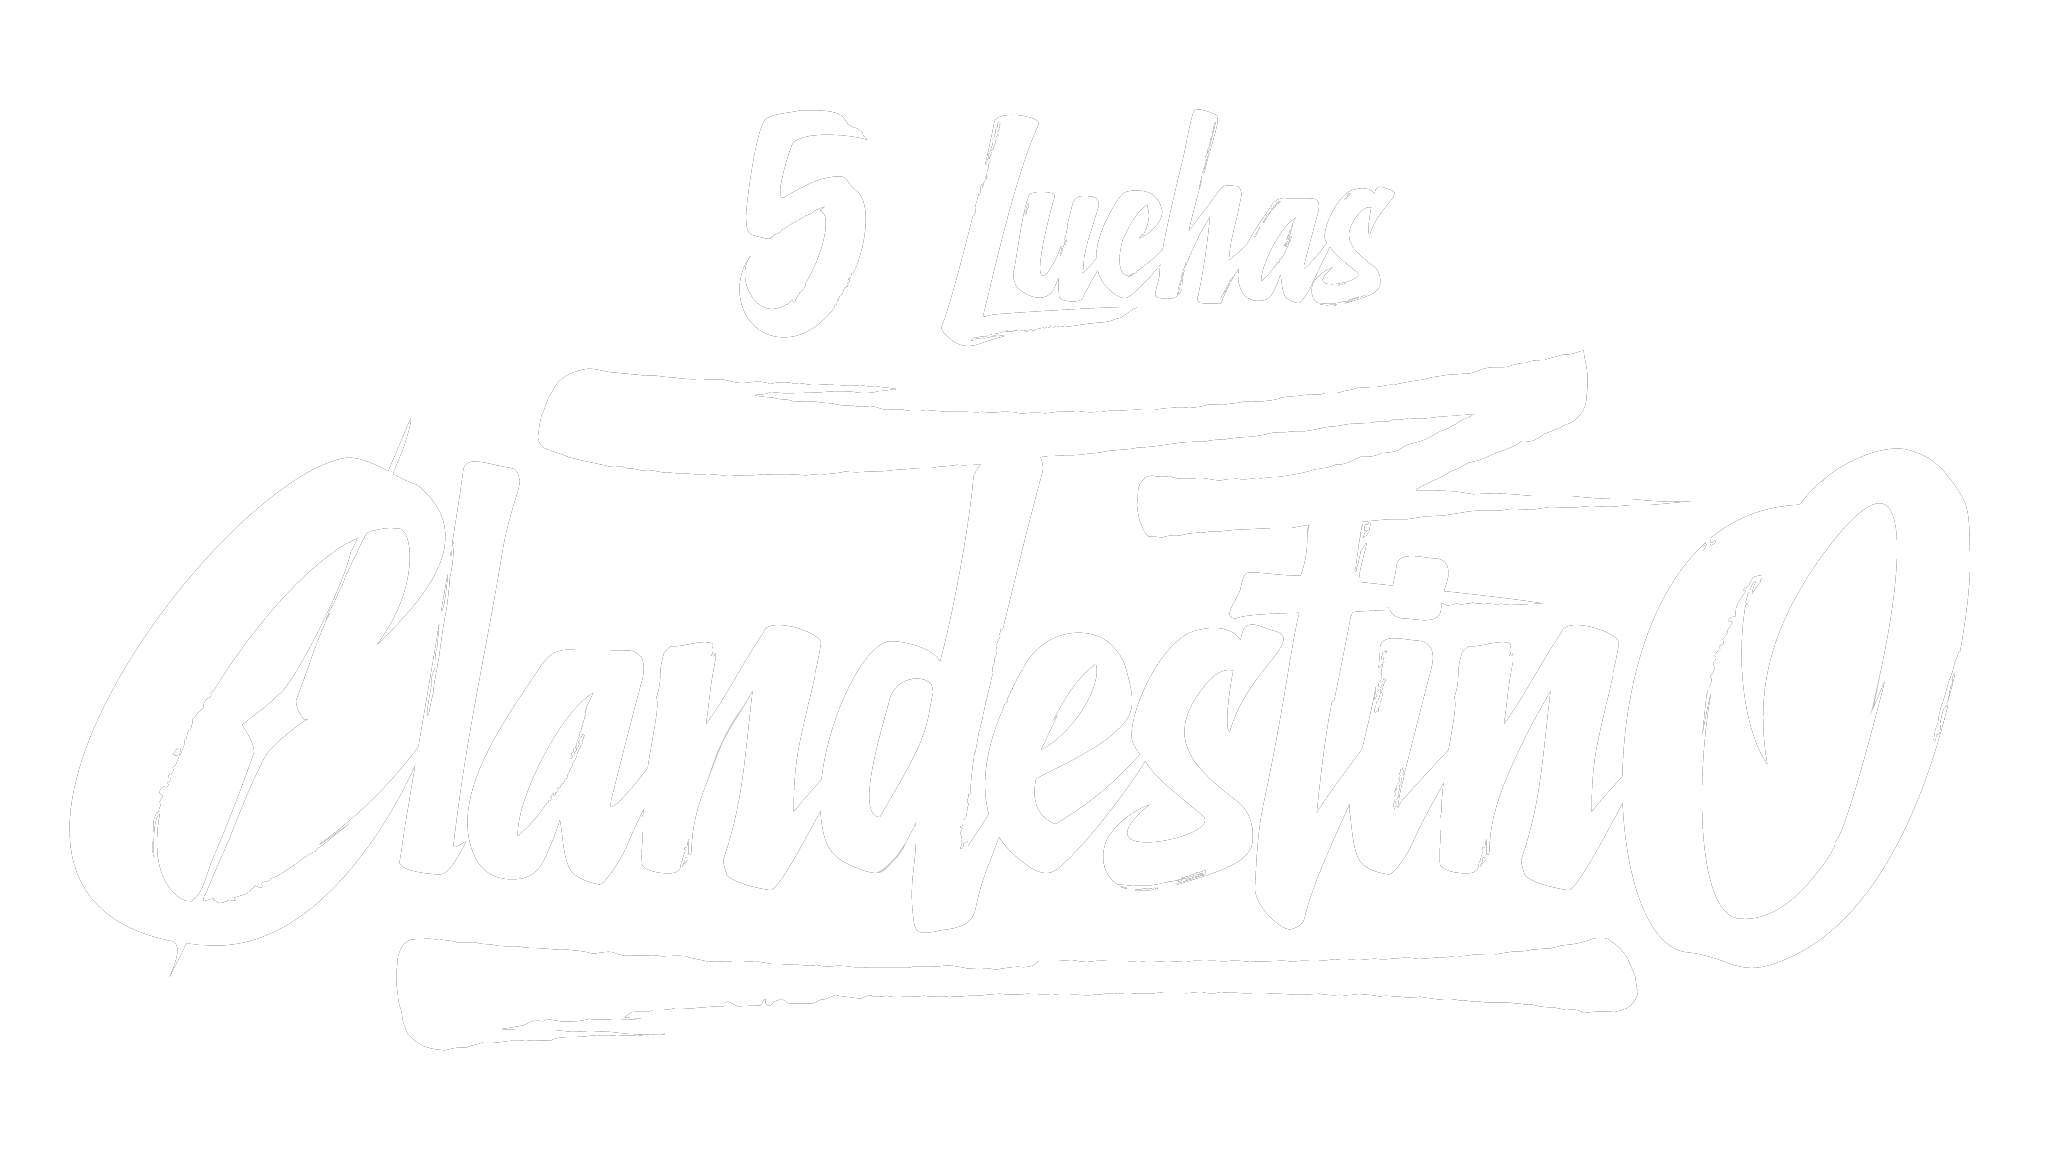 Logotipo de 5 Luchas Clandestino